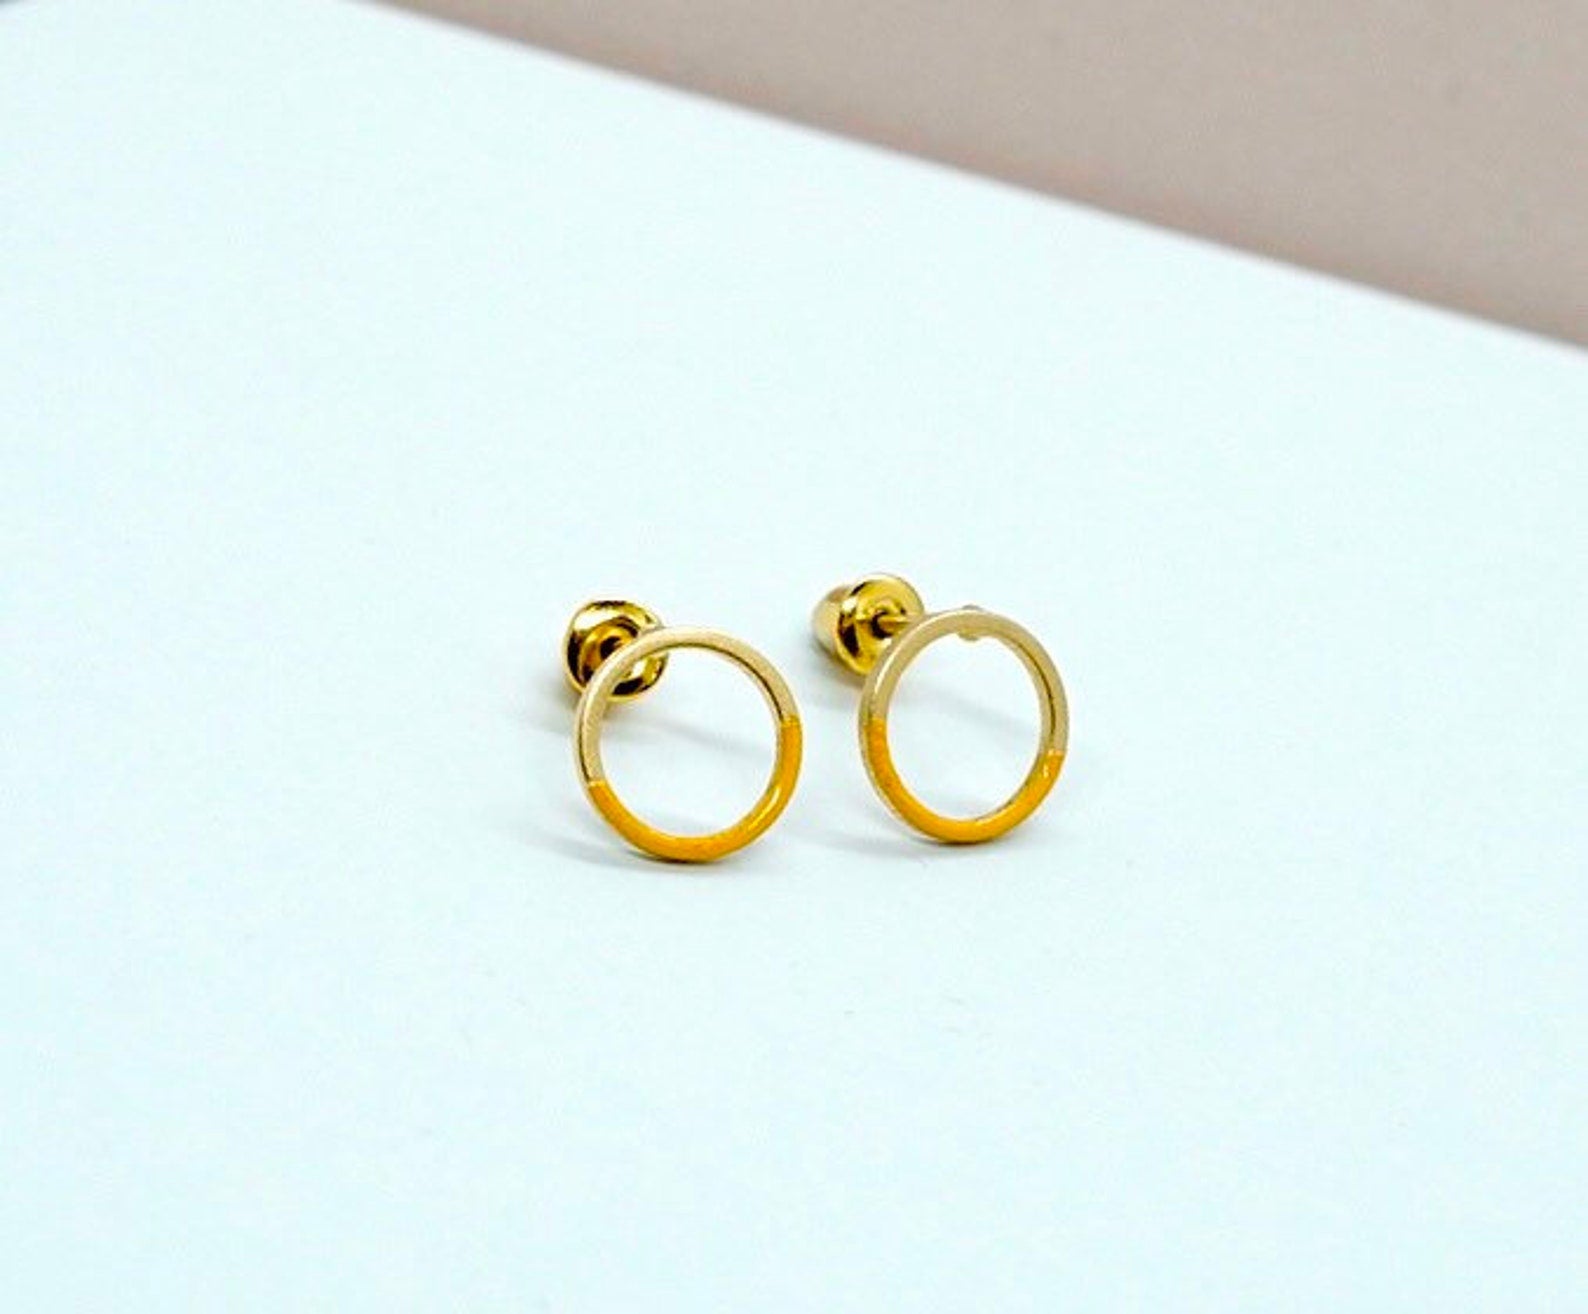 Contemporary handmade open circle stud earrings